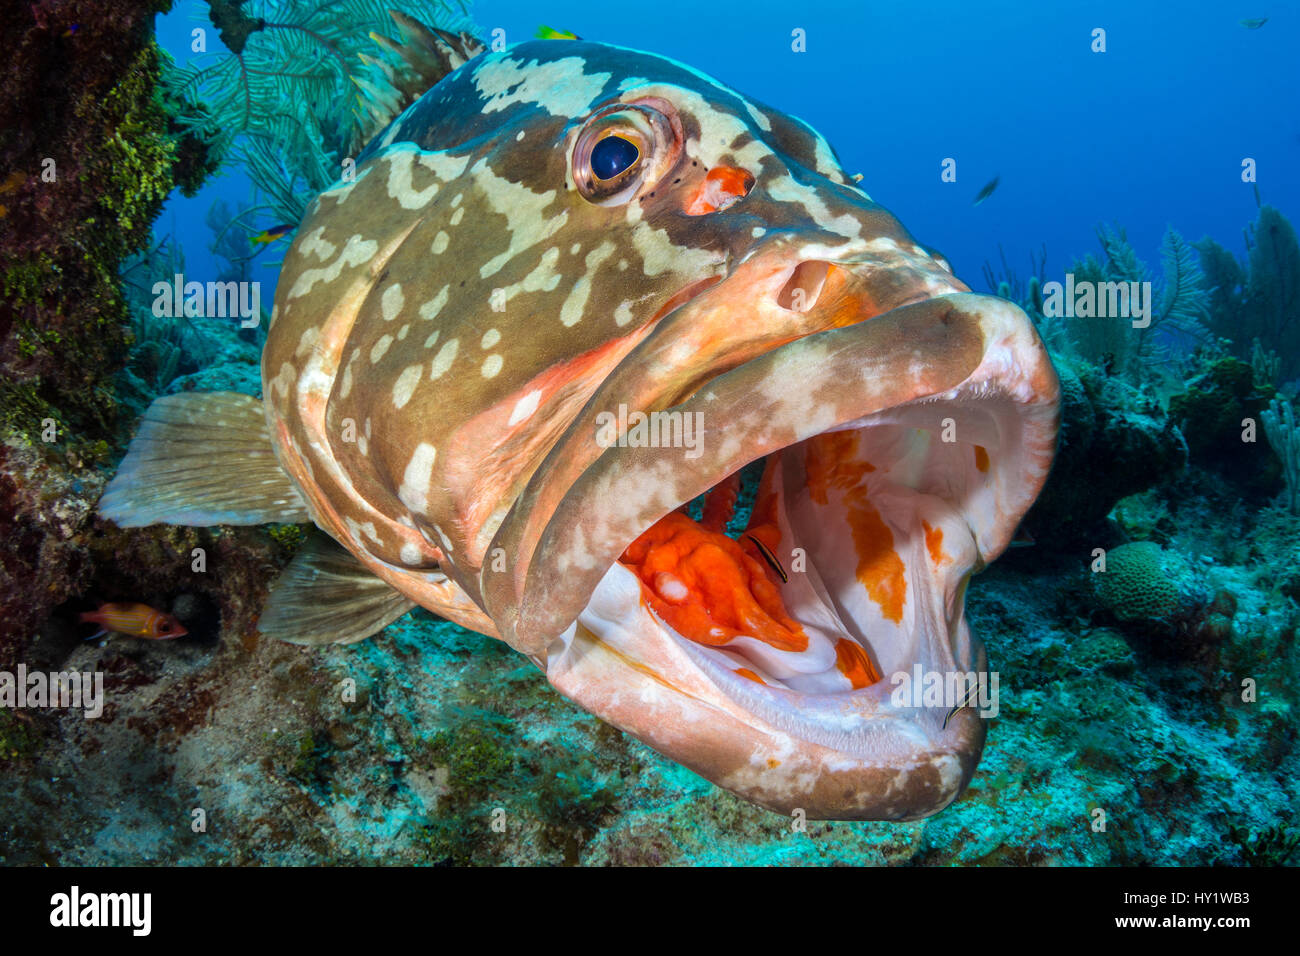 Nassau grouper (Epinephelus striatus) with Cleaner gobies (Gobiosoma genie) and juvenile Spanish hogfish (Bodianus rufus) on coral reef. Bloody Bay Wall, Little Cayman, Cayman Islands. Caribbean Sea. Stock Photo